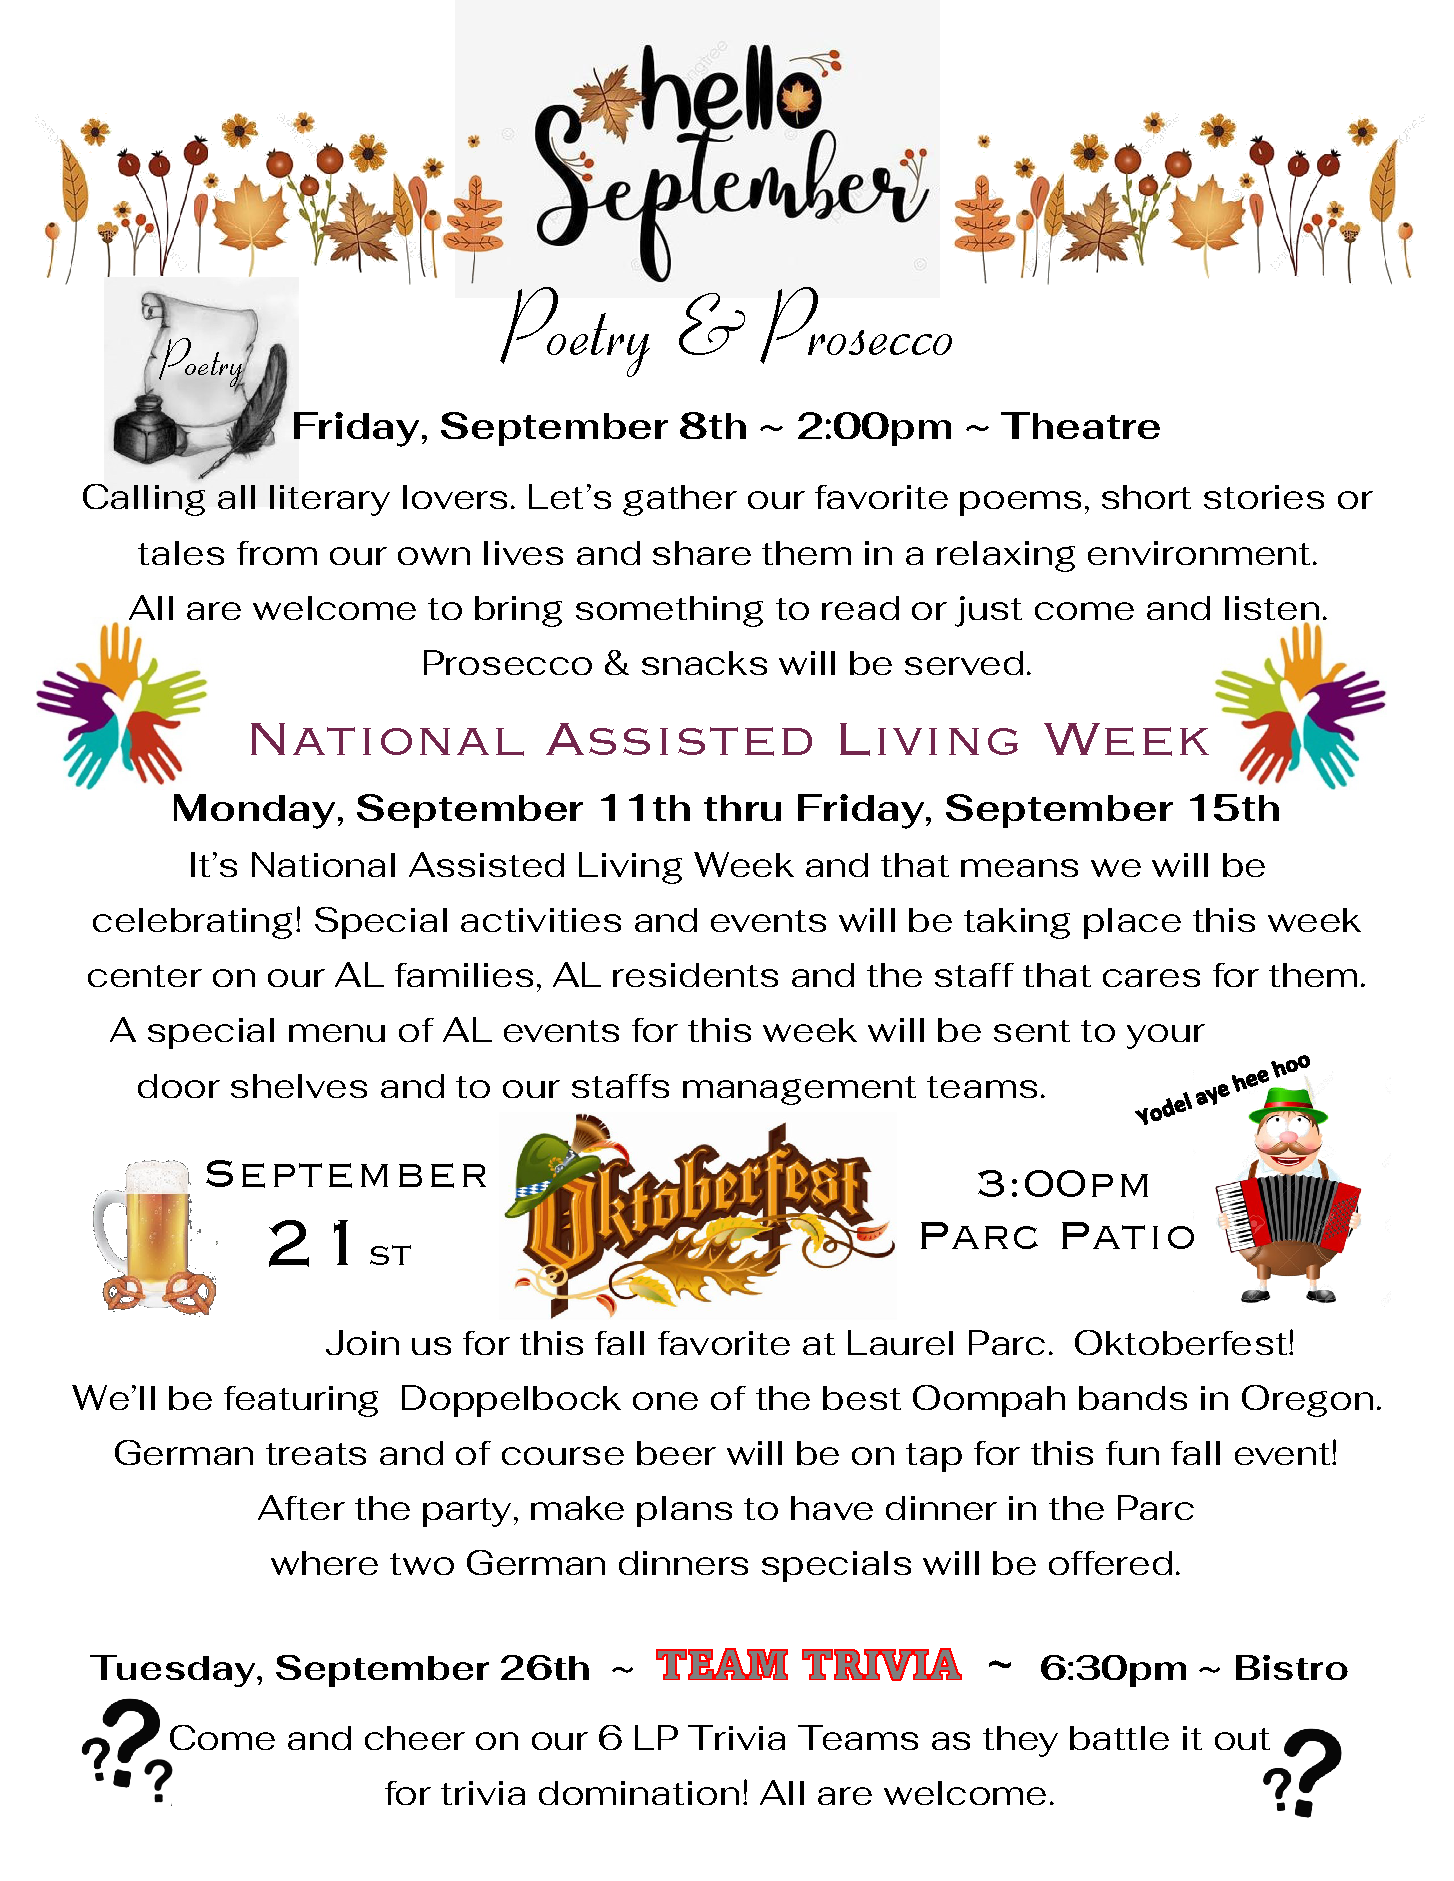 Laurel Parc September Events Calendar